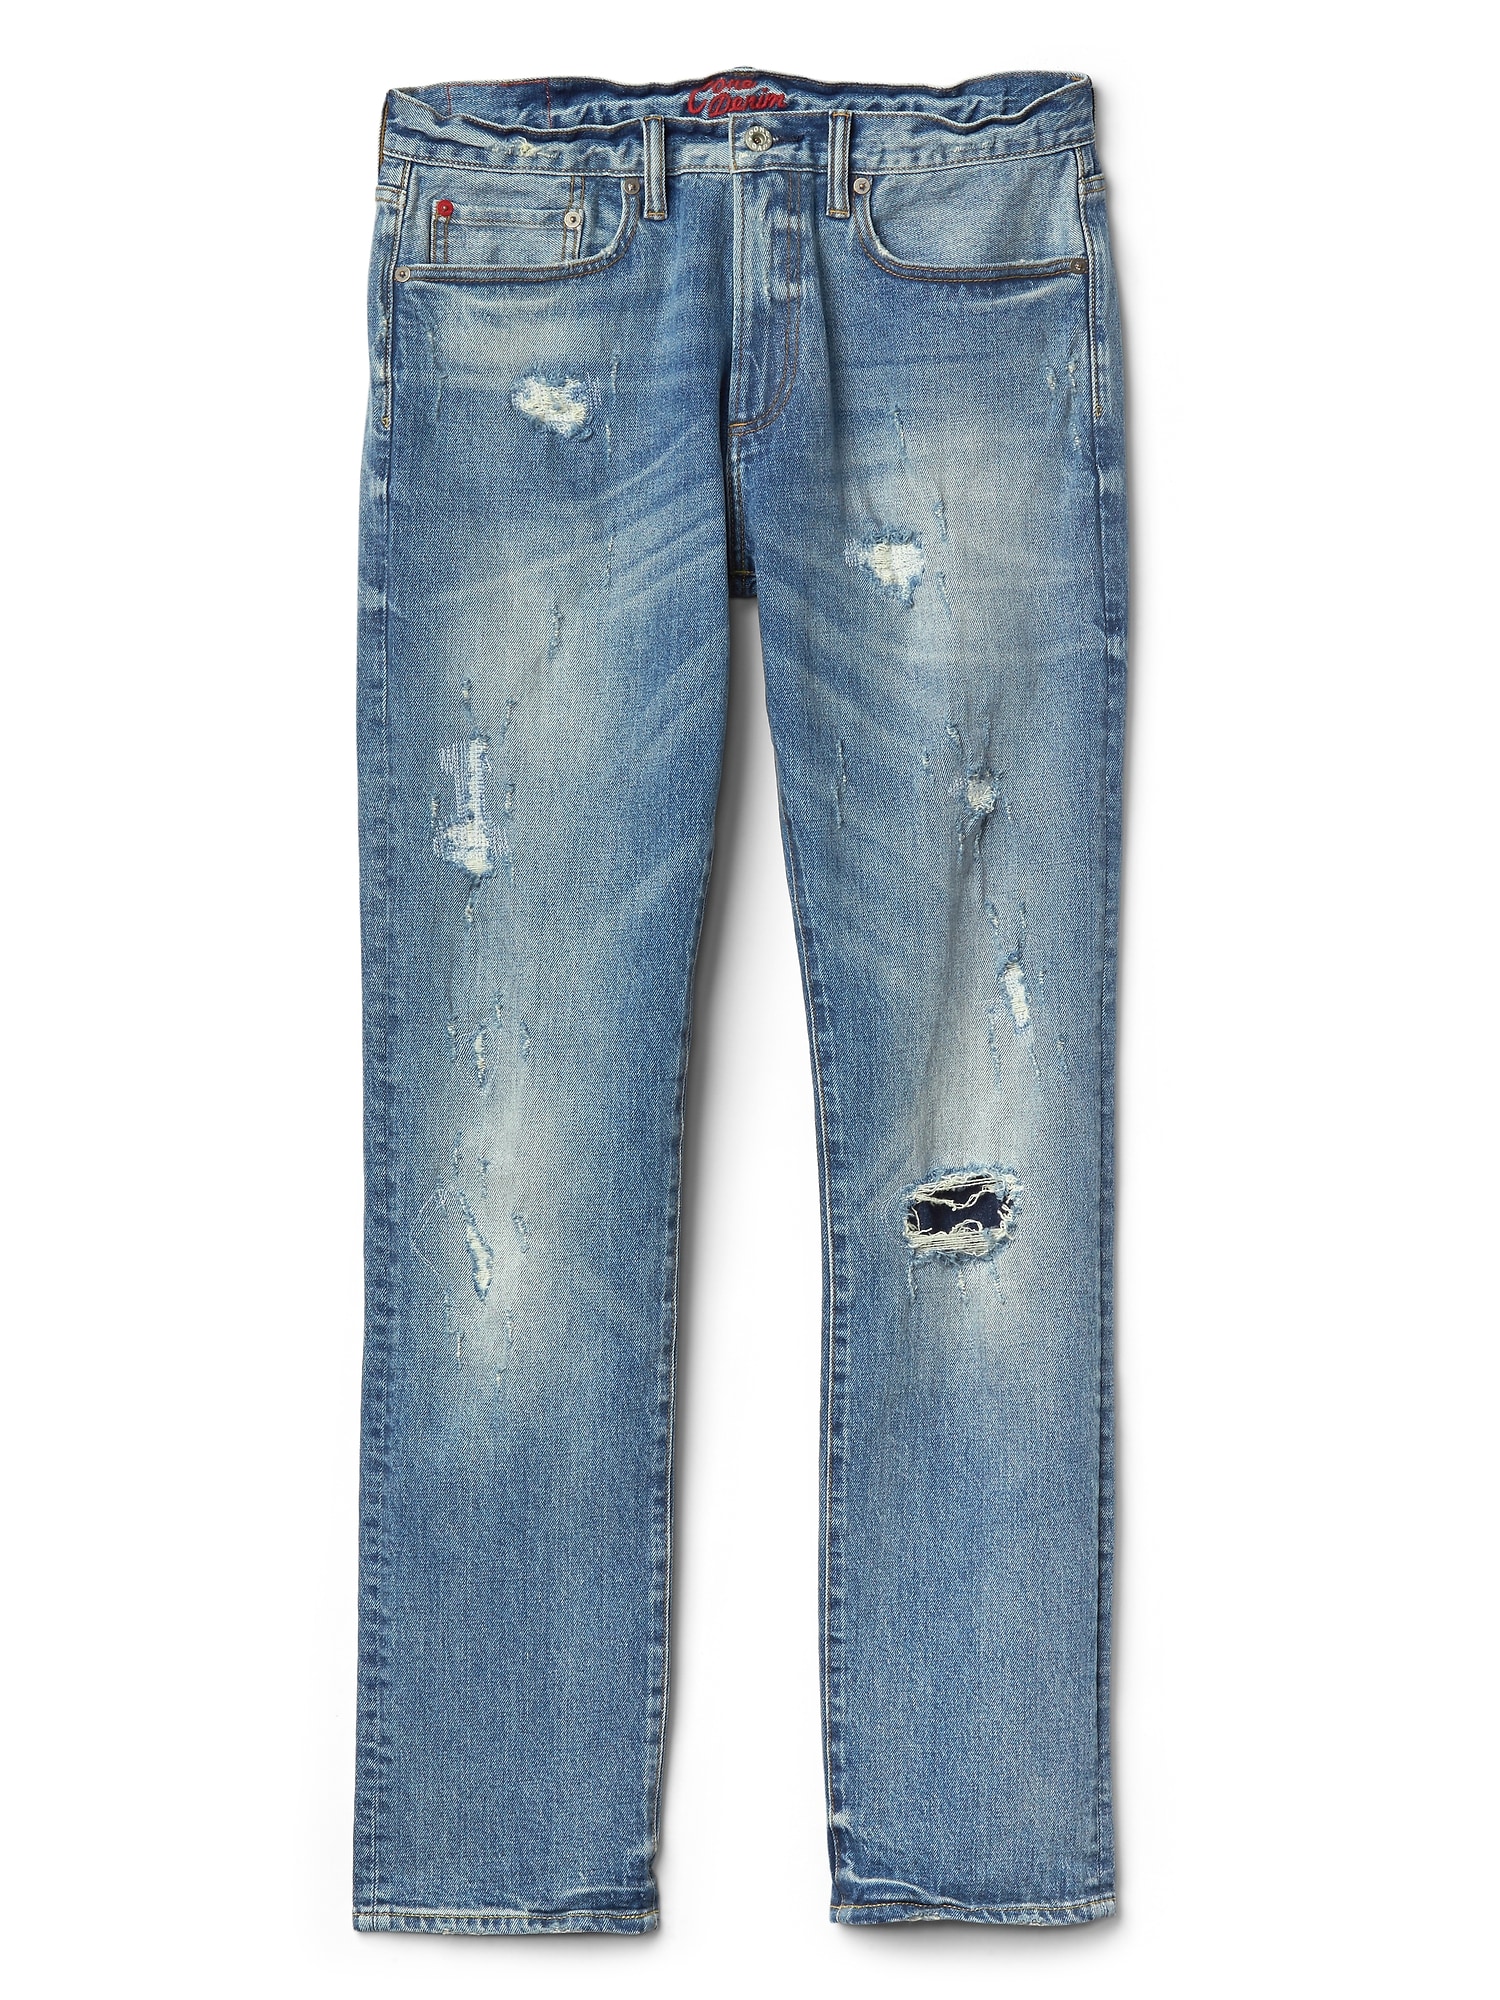 Cone Denim® Destructed Jeans in Slim Fit with GapFlex | Gap